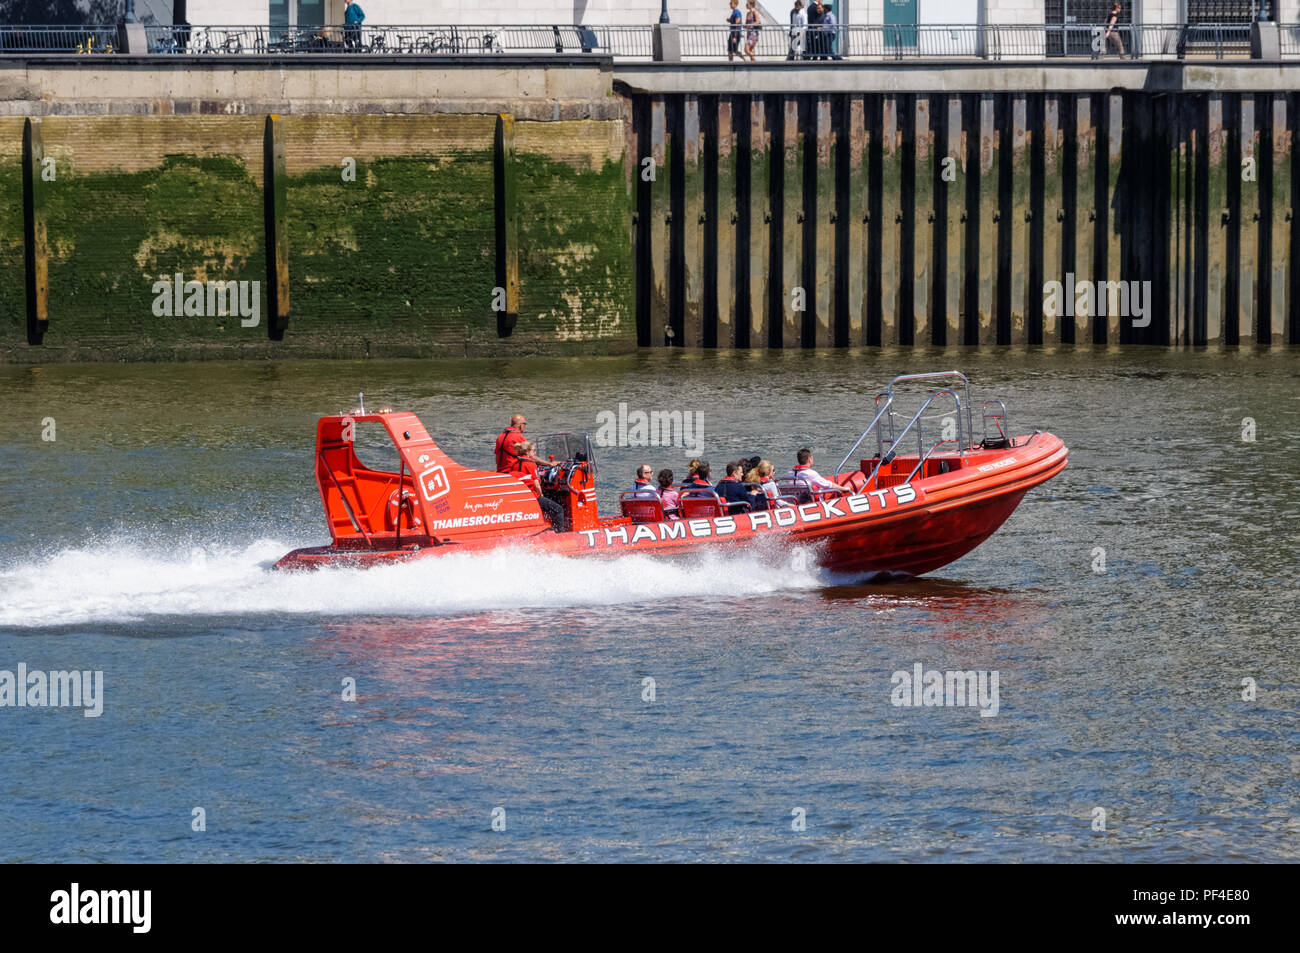 Thames Rockets tourist speedboat on the River Thames, London England United Kingdom UK Stock Photo